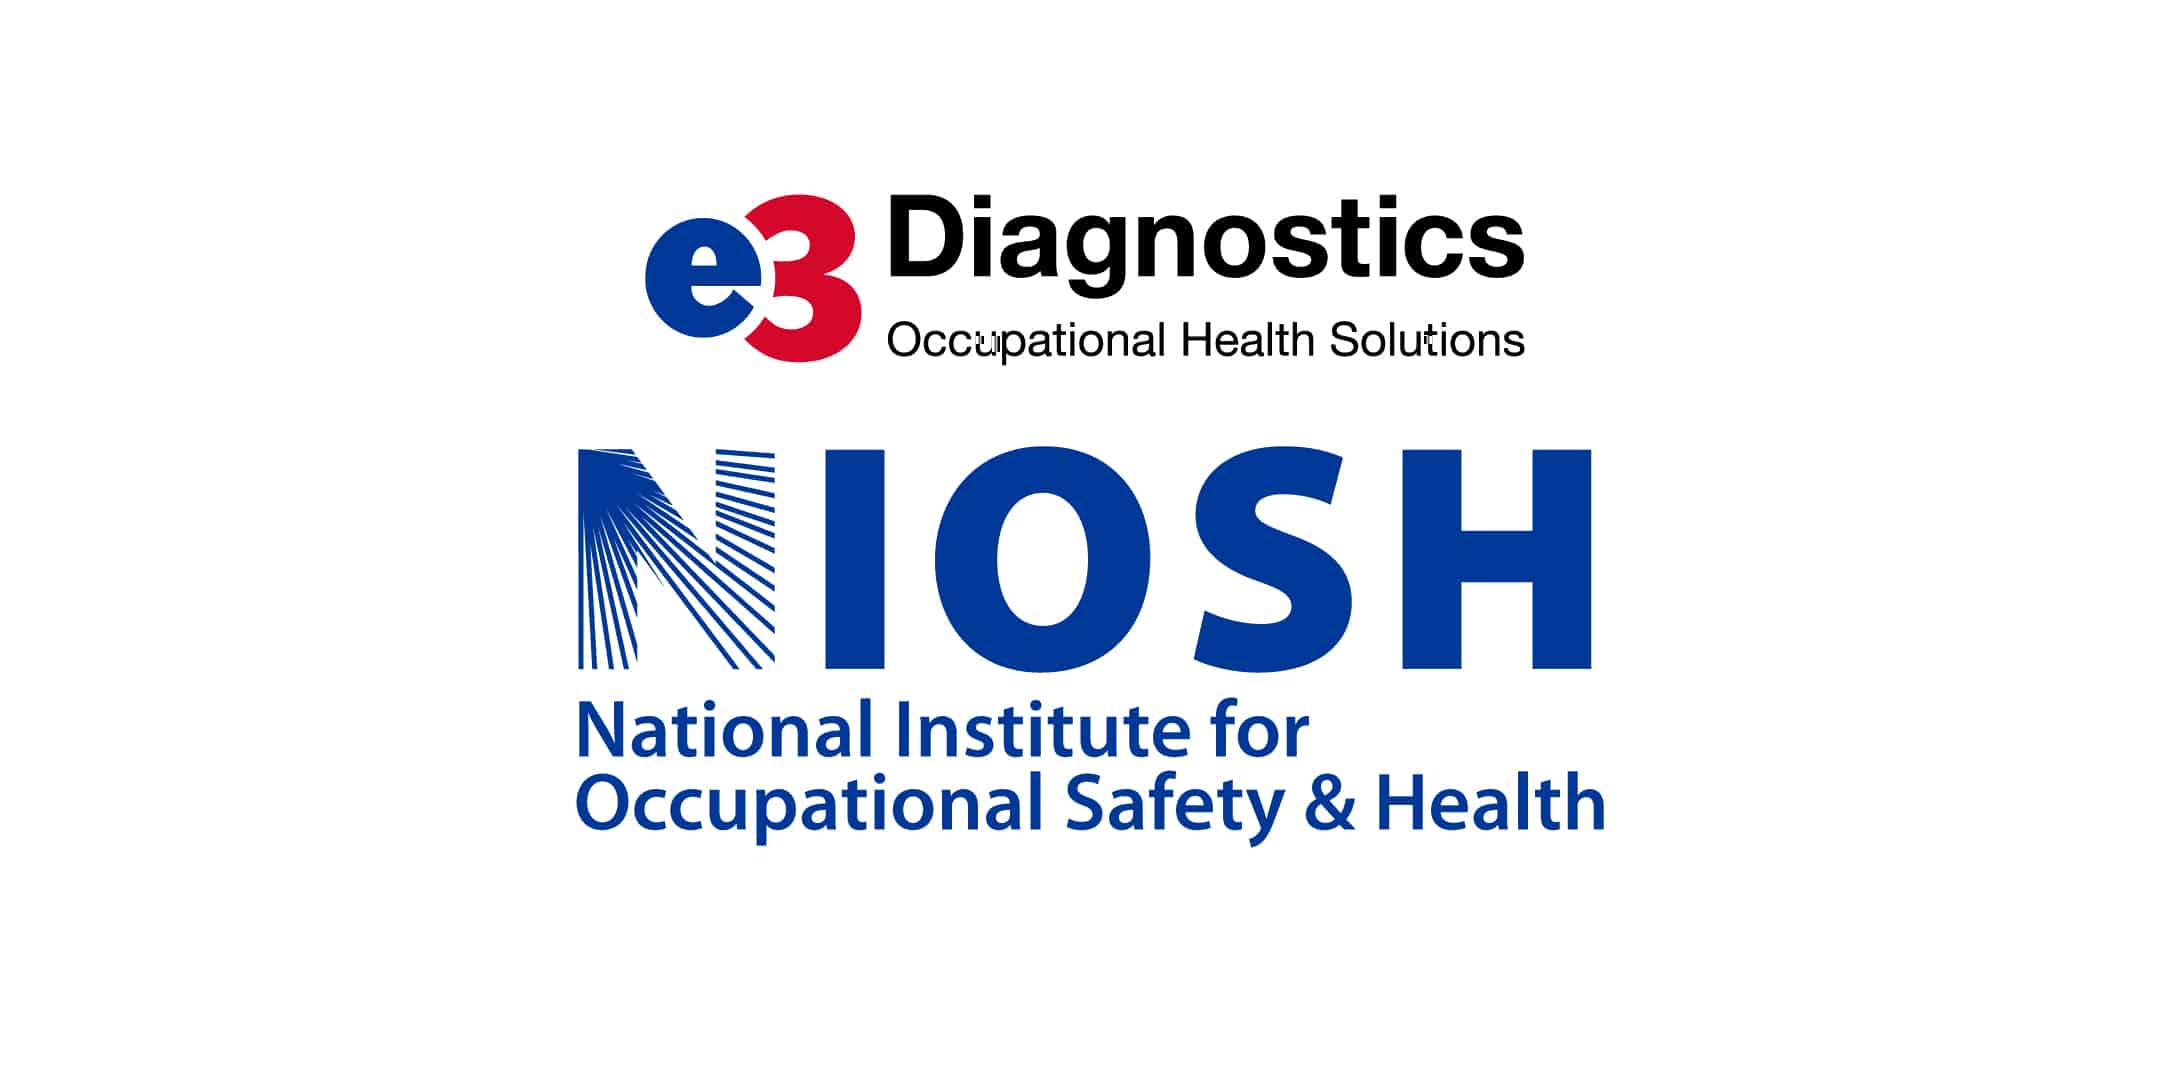 Niosh Certification With E3 Occupational 3